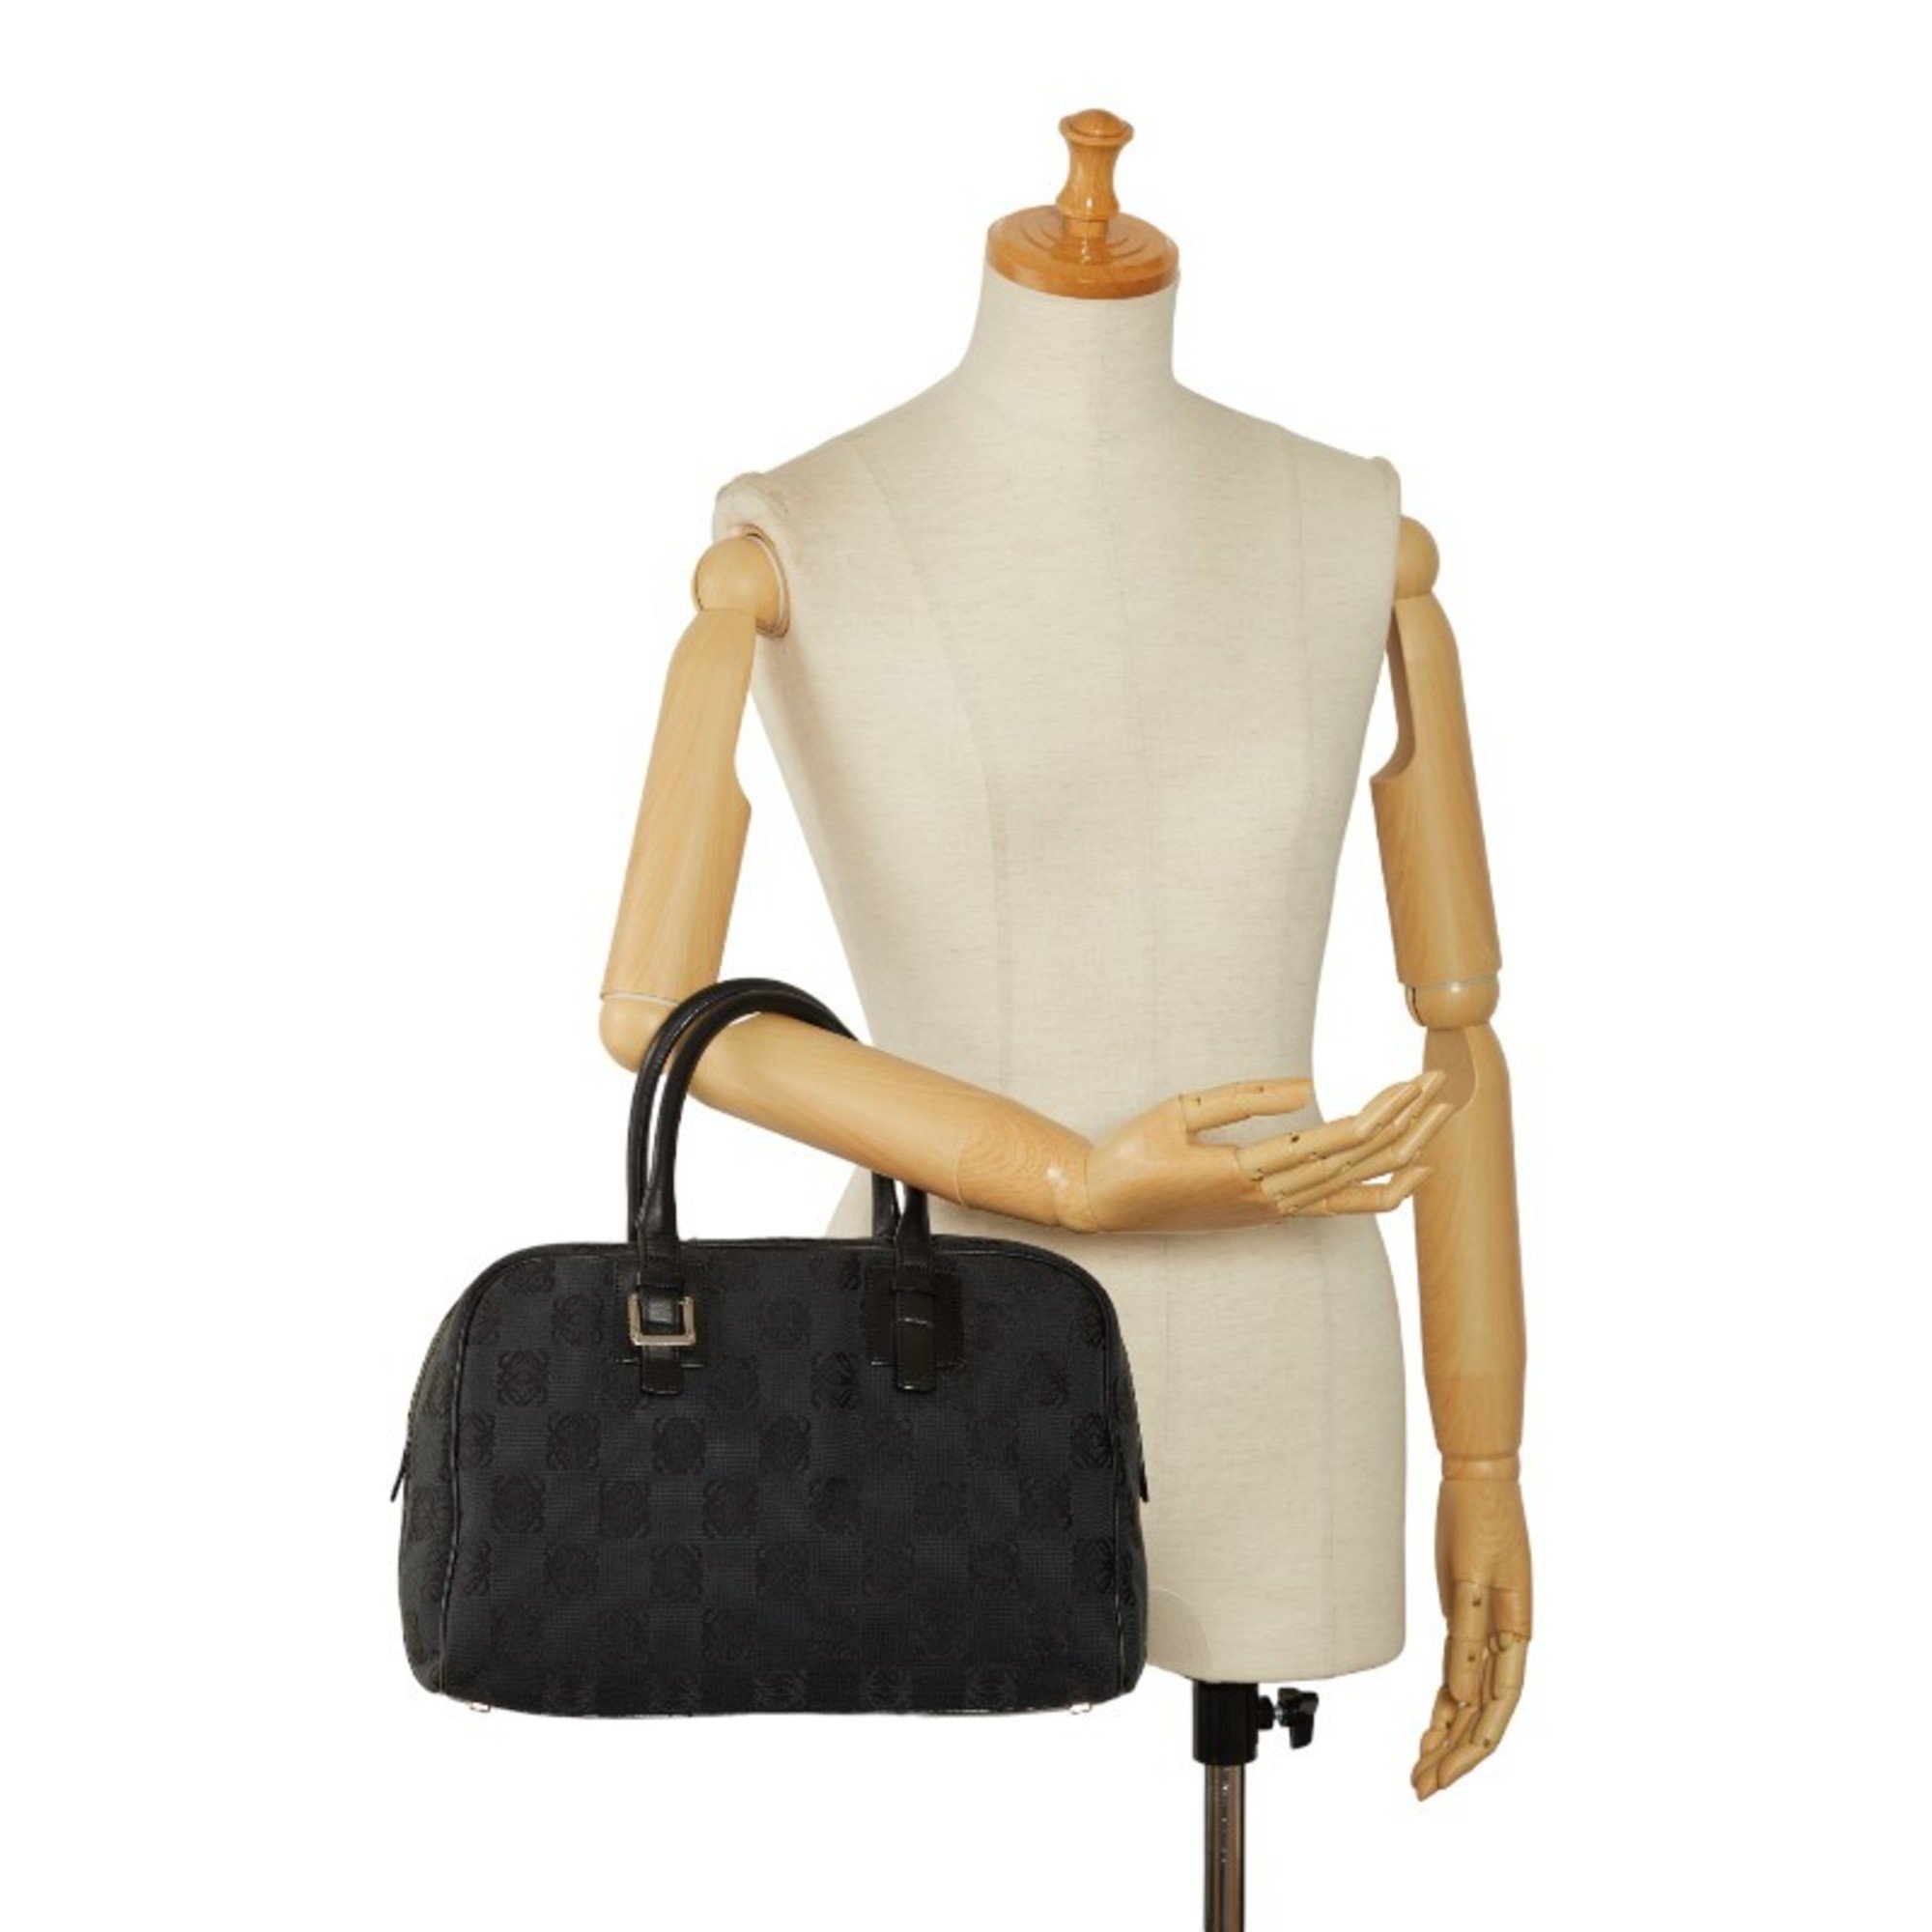 LOEWE Anagram Handbag Boston Bag Black Canvas Leather Women's